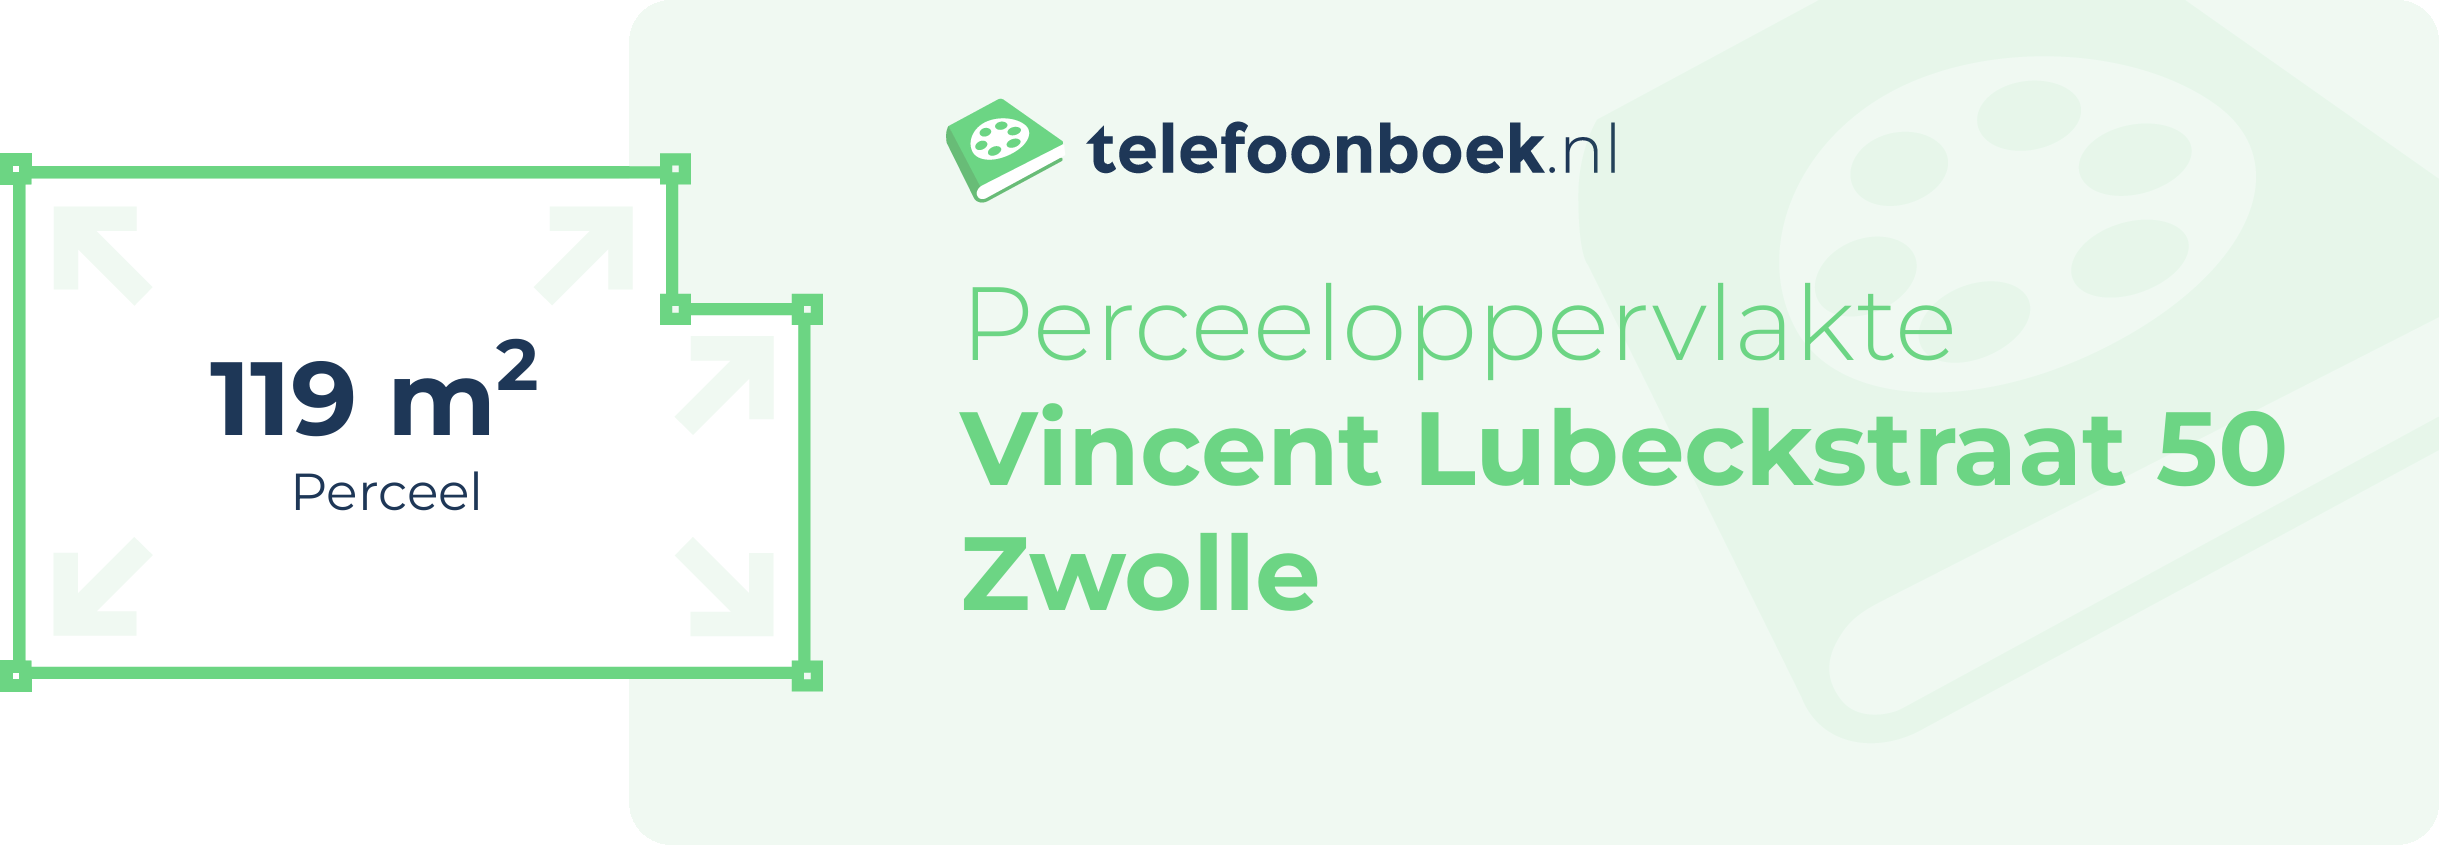 Perceeloppervlakte Vincent Lubeckstraat 50 Zwolle